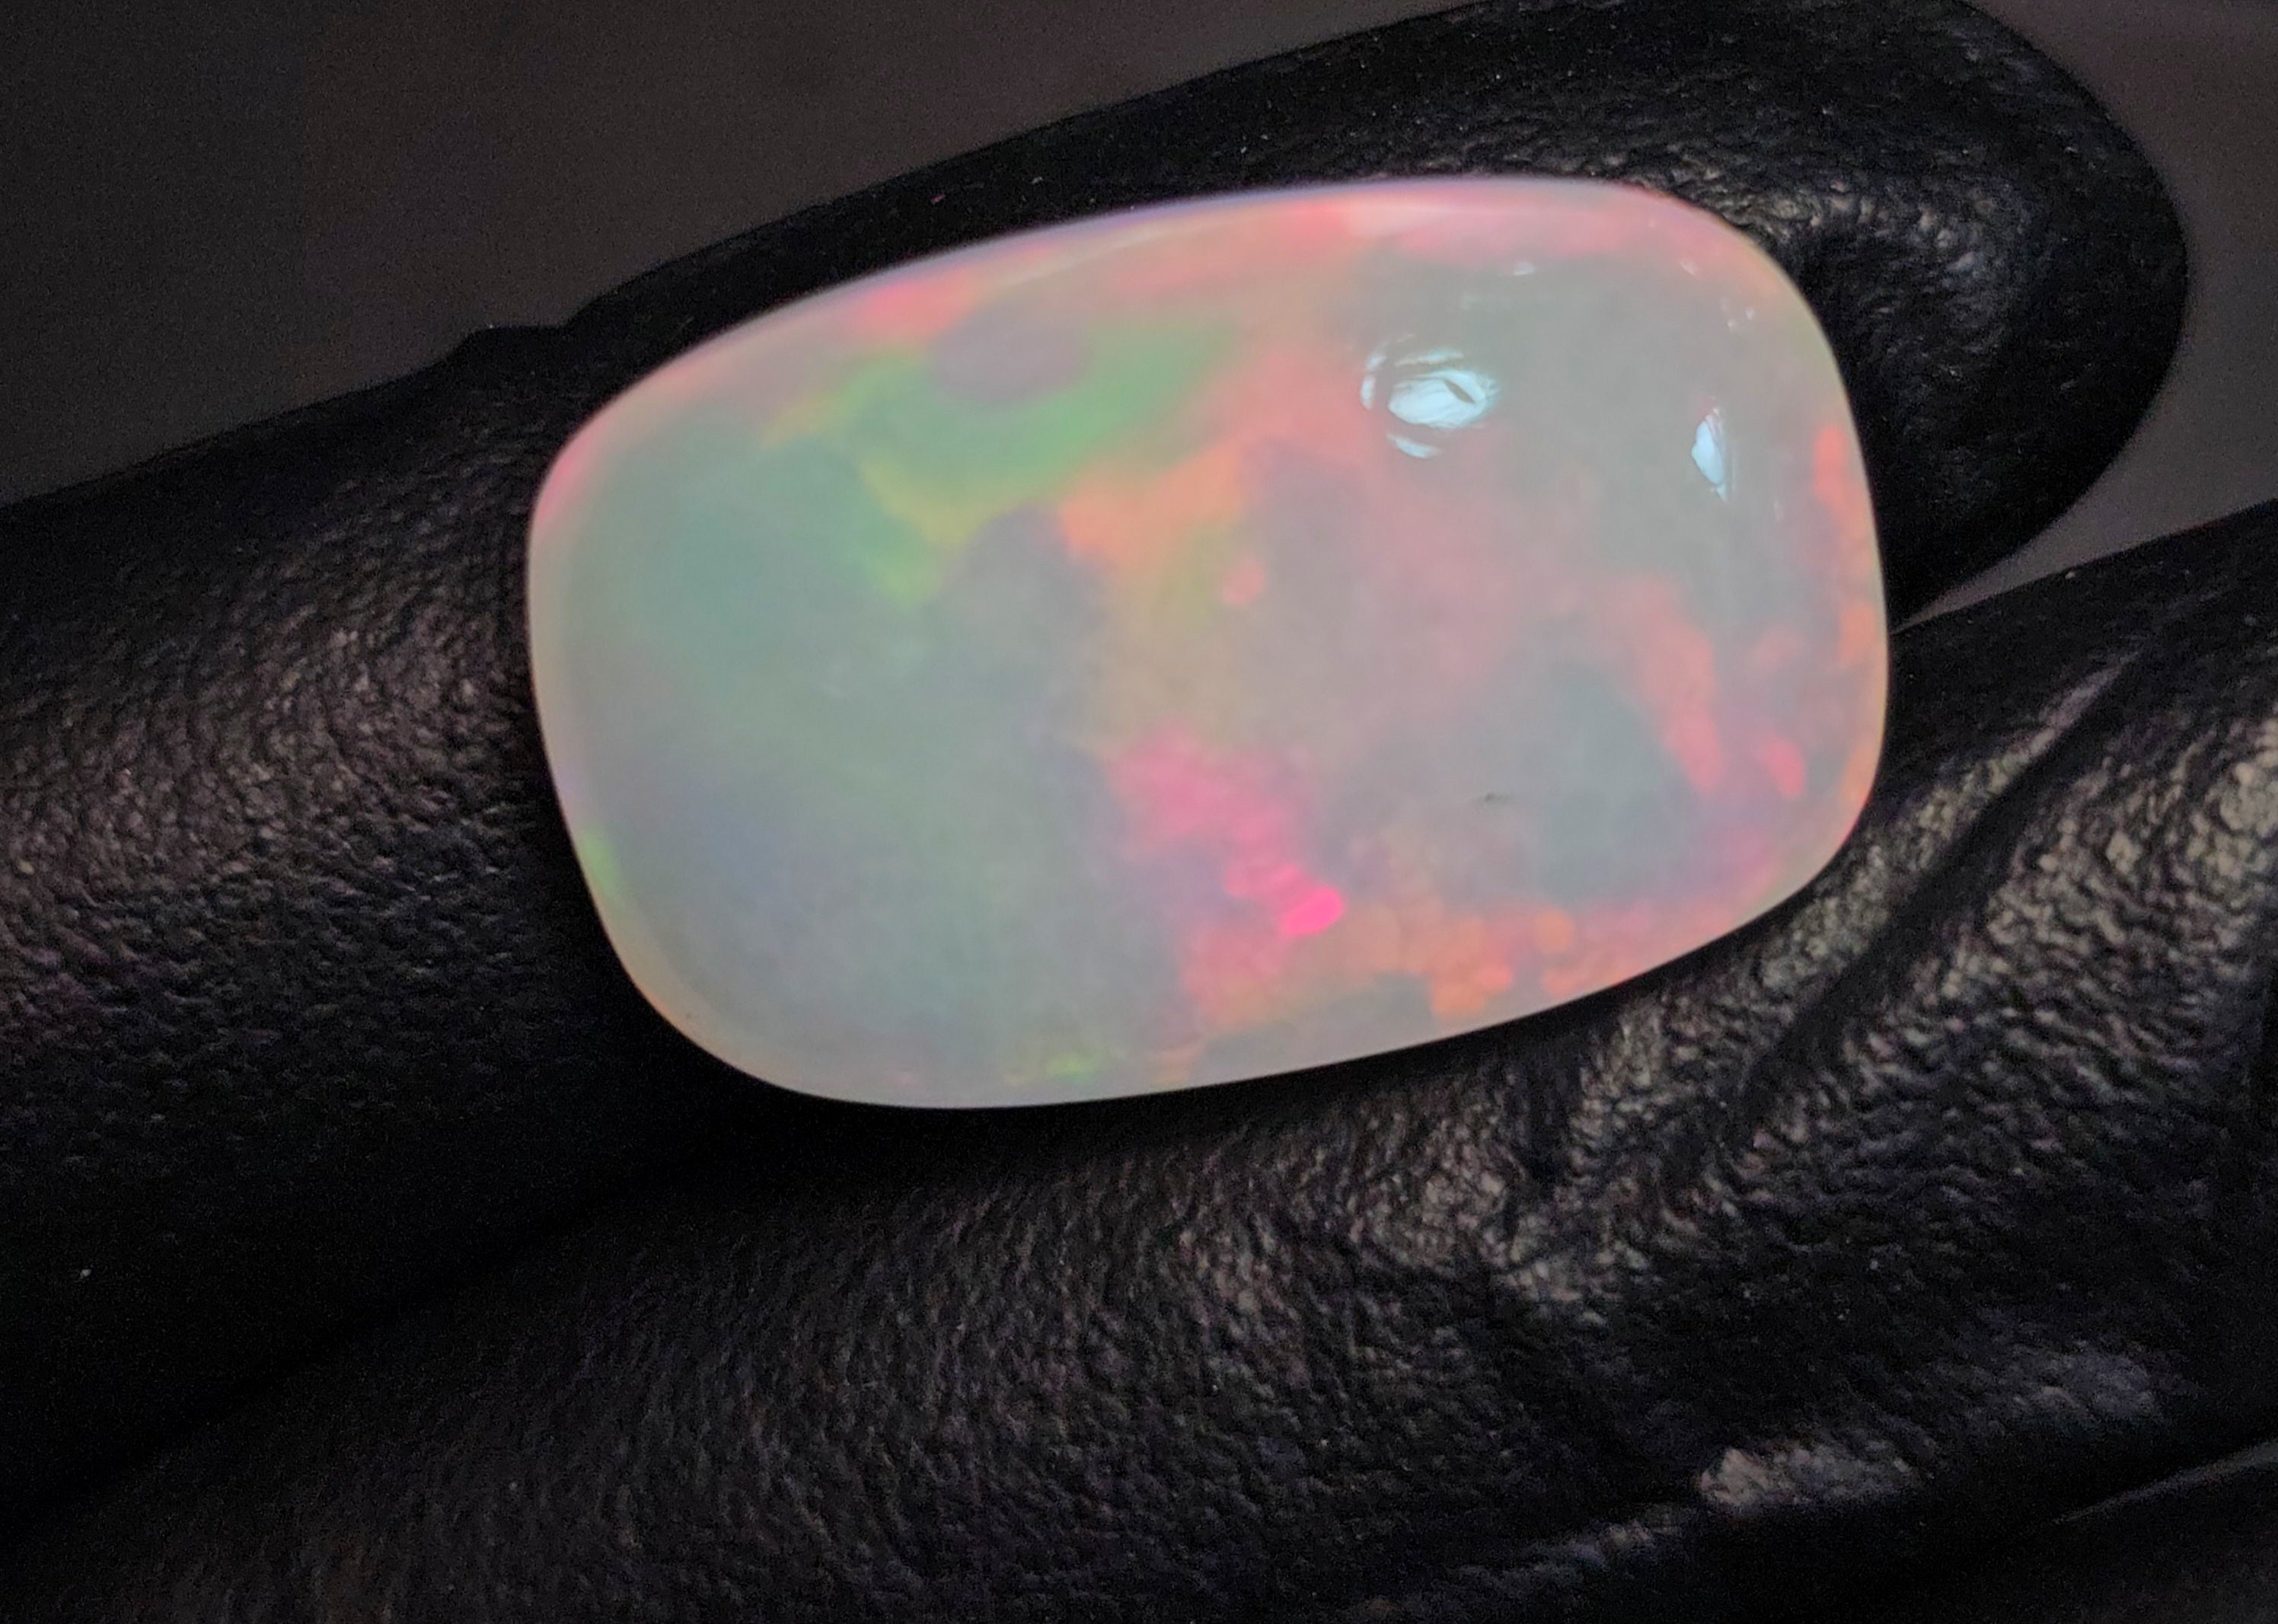 1 Pcs Of Natural Ethopian Opal Oval Shape  |WT: 15 Cts|Size: 25x16mm - The LabradoriteKing